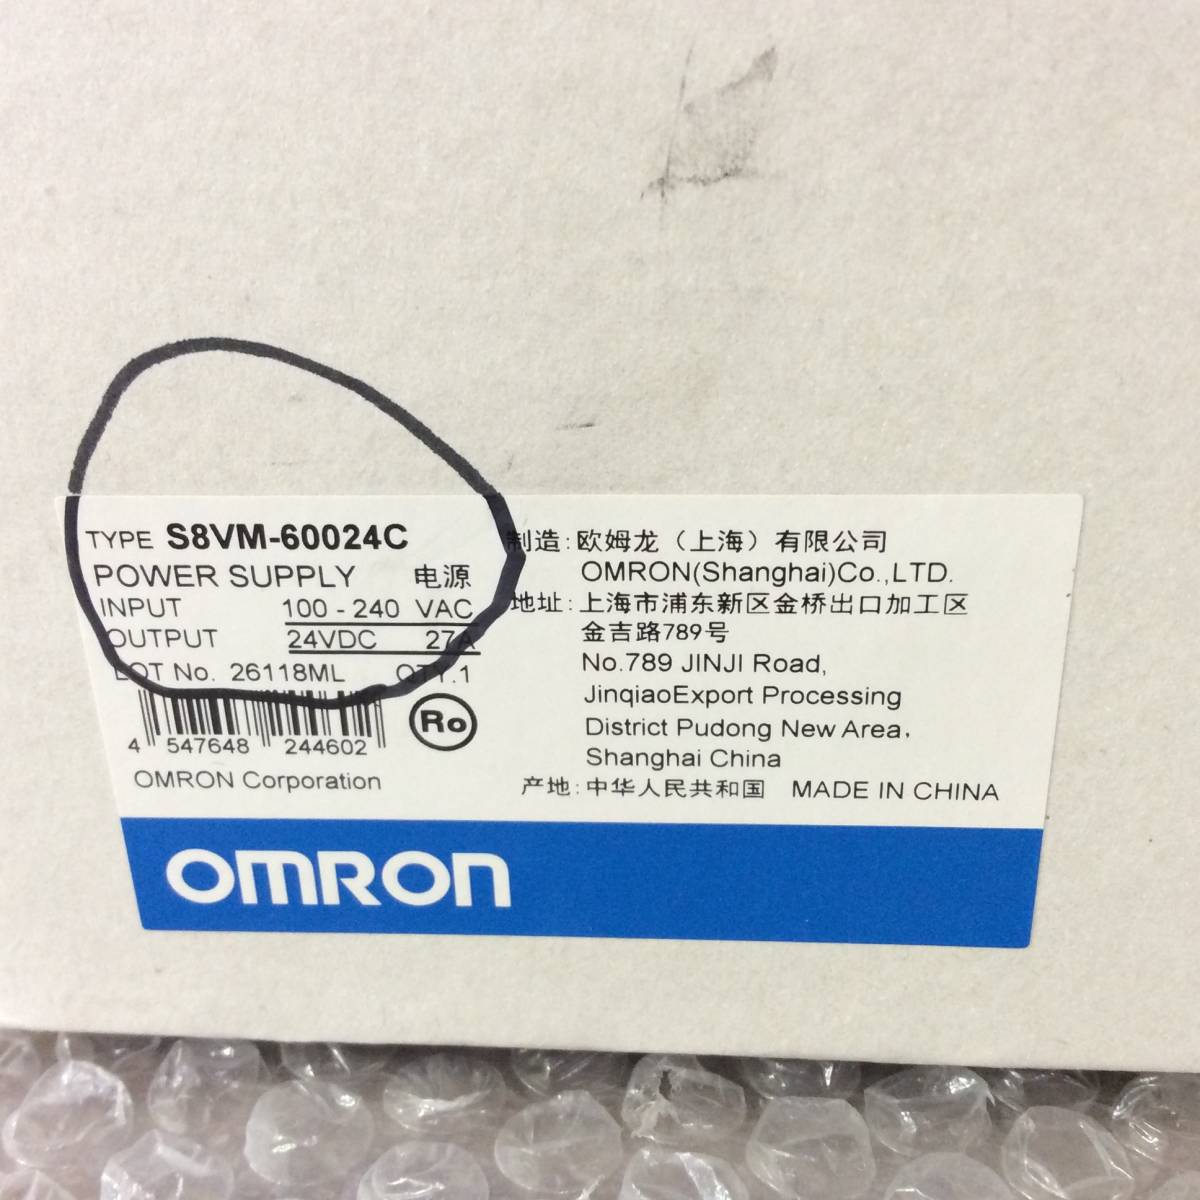 【AH-8746】 ★送料無料★ 未使用品 OMRON オムロン スイッチングパワーサプライ カバー付タイプ S8VM-60024C